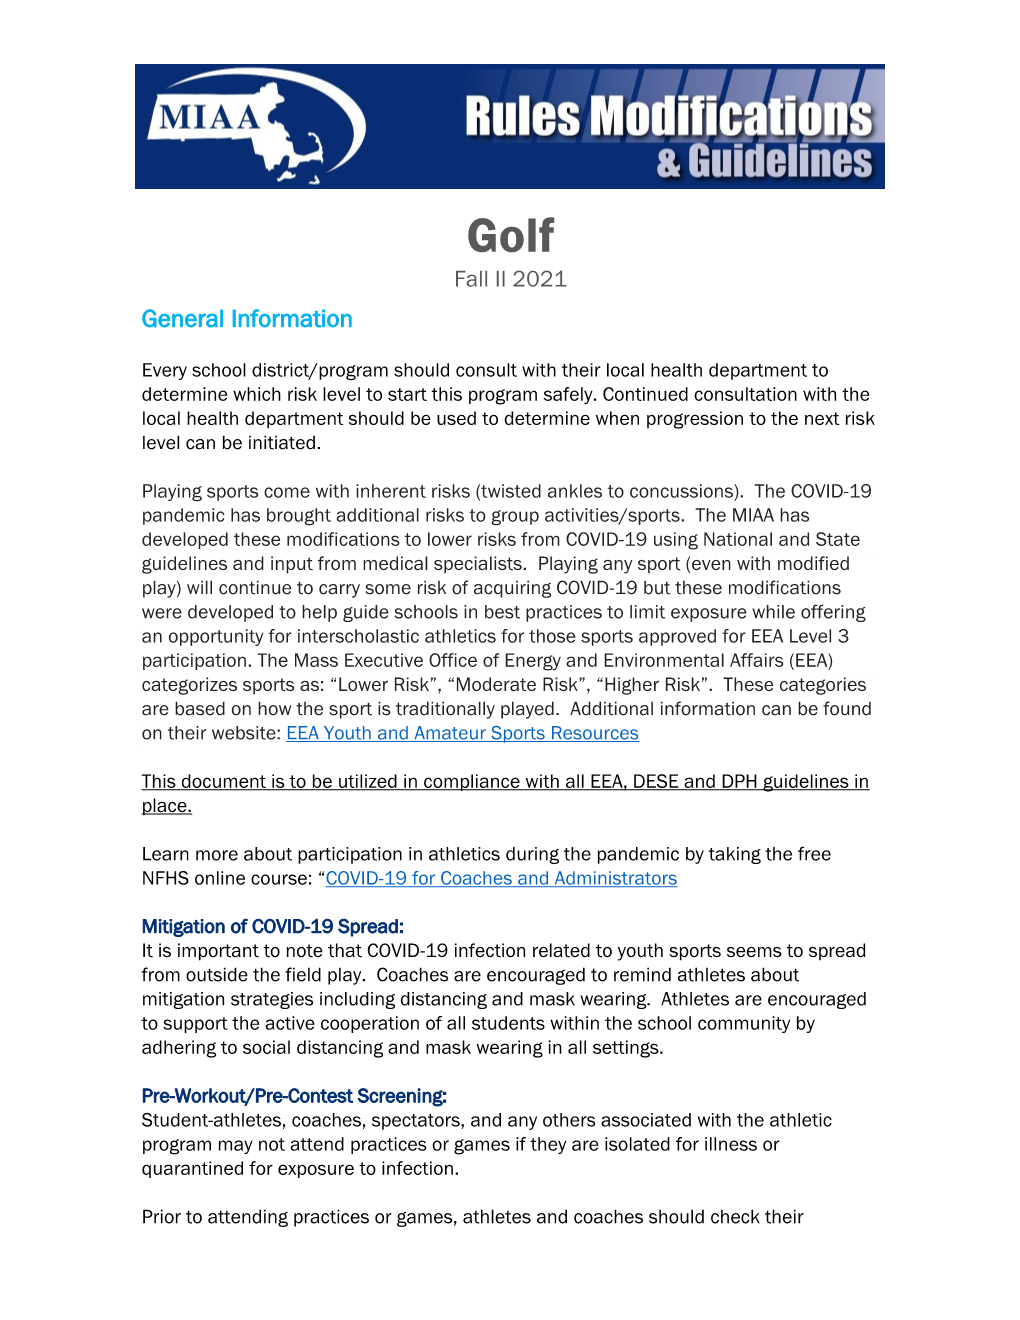 Golf Fall II 2021 General Information